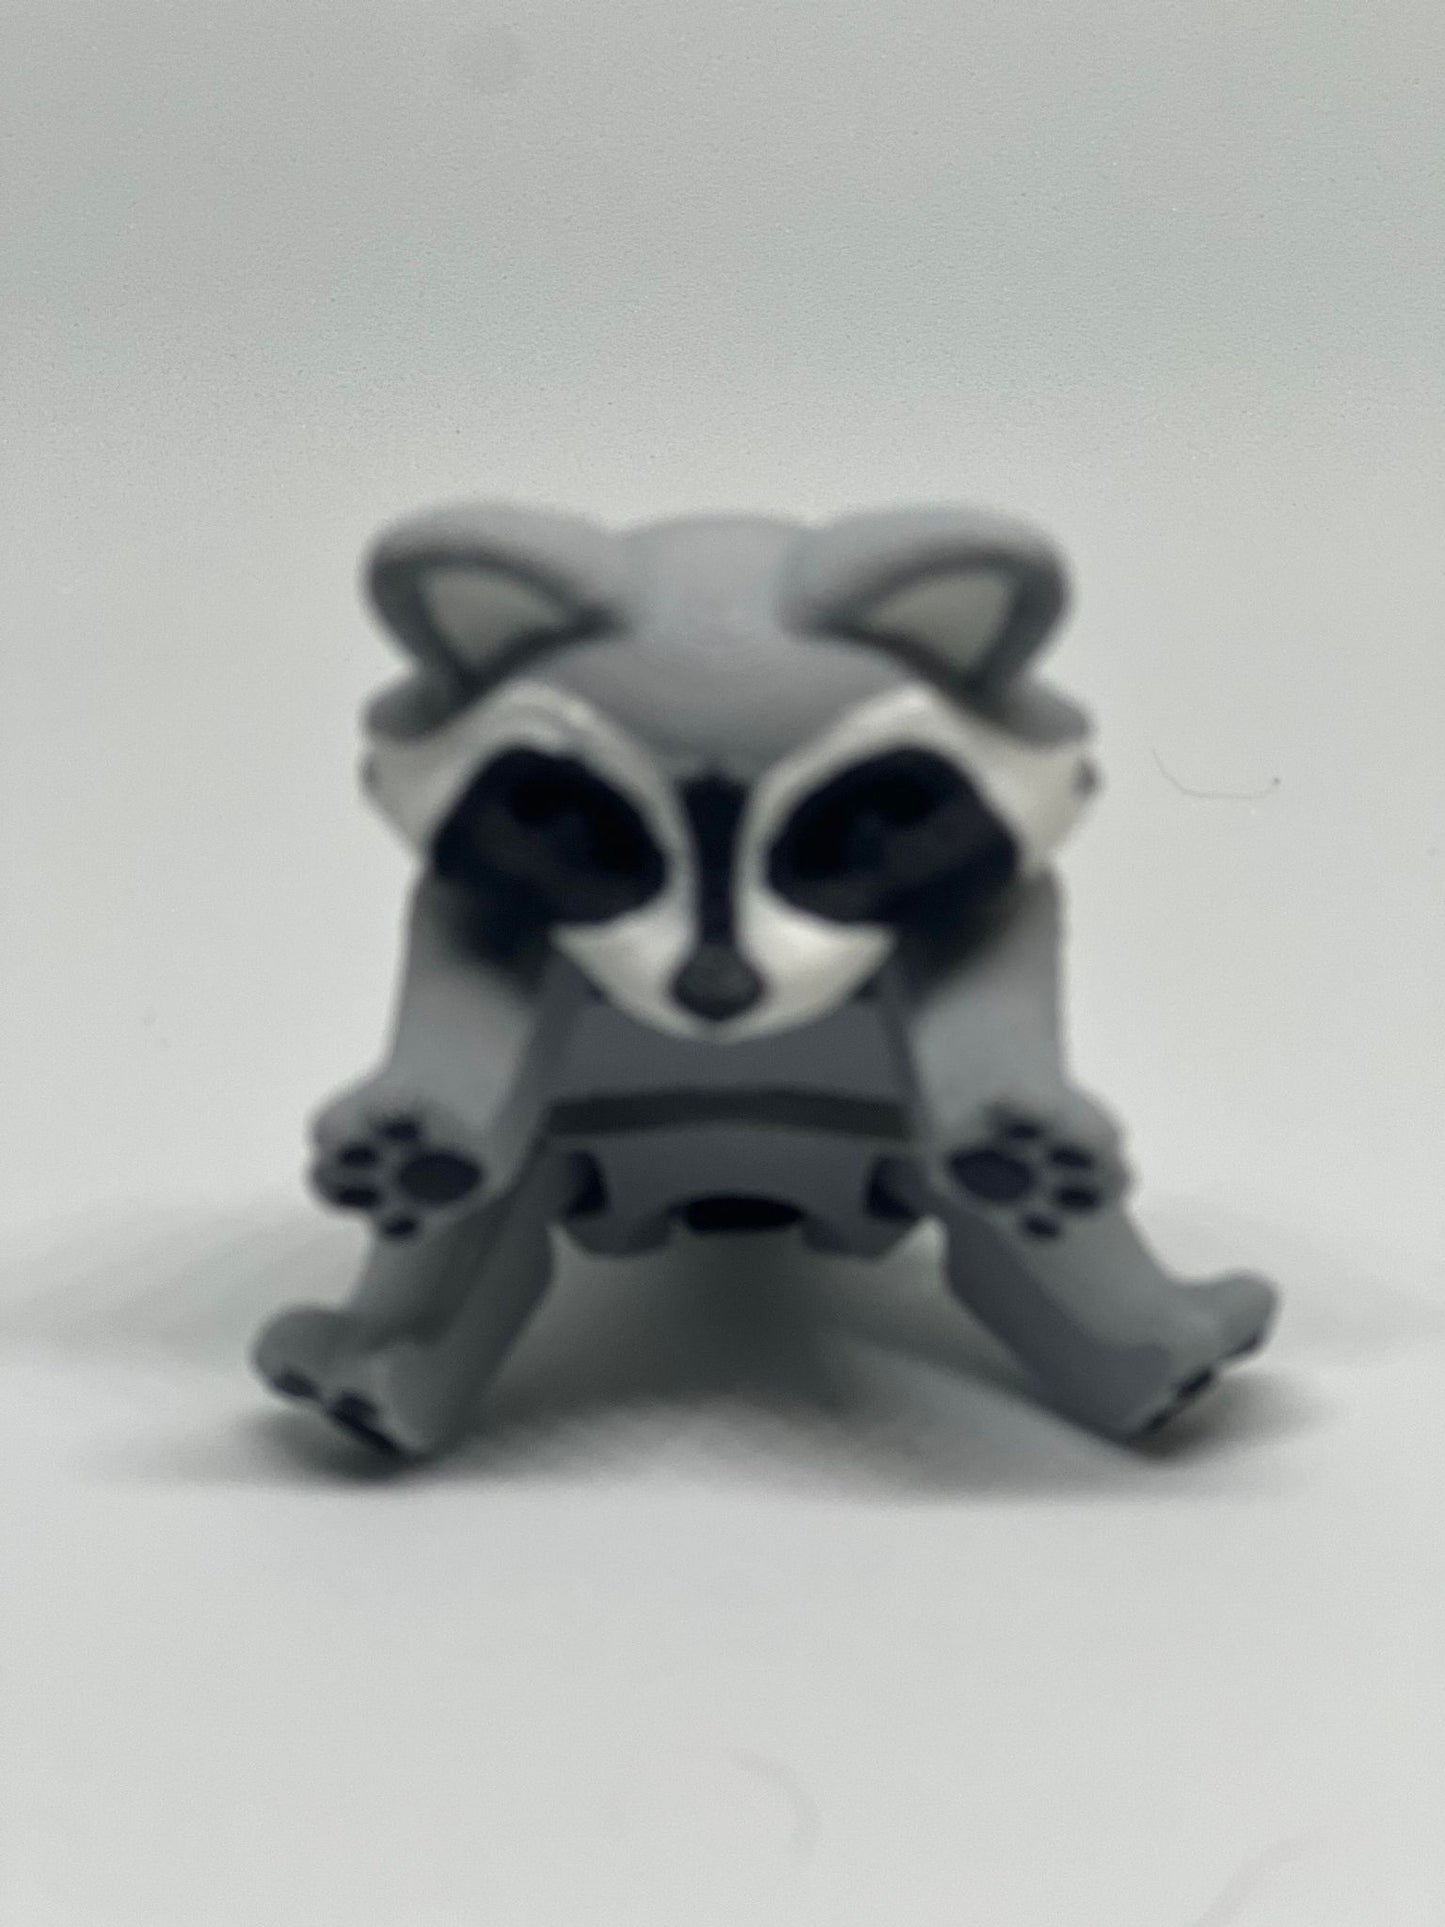 3D printed Raccoons in Trash Can!